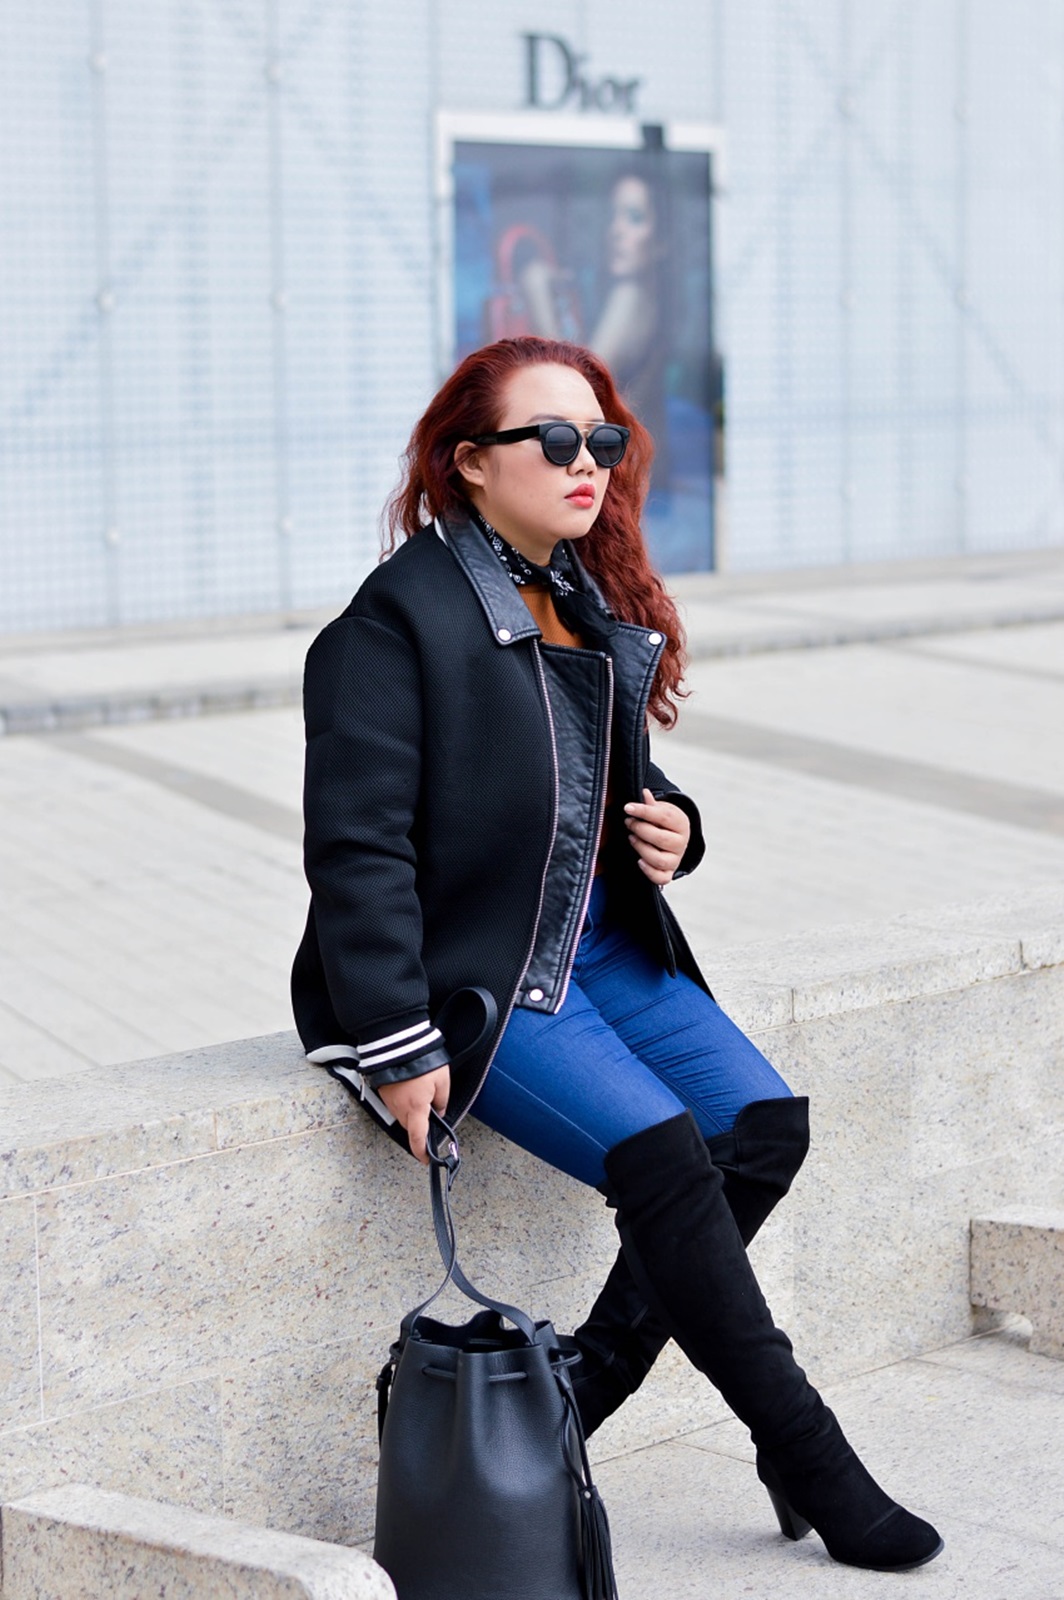 Modern Rockabilly - StyleChe  A Fashion and Lifestyle Blog from Macau